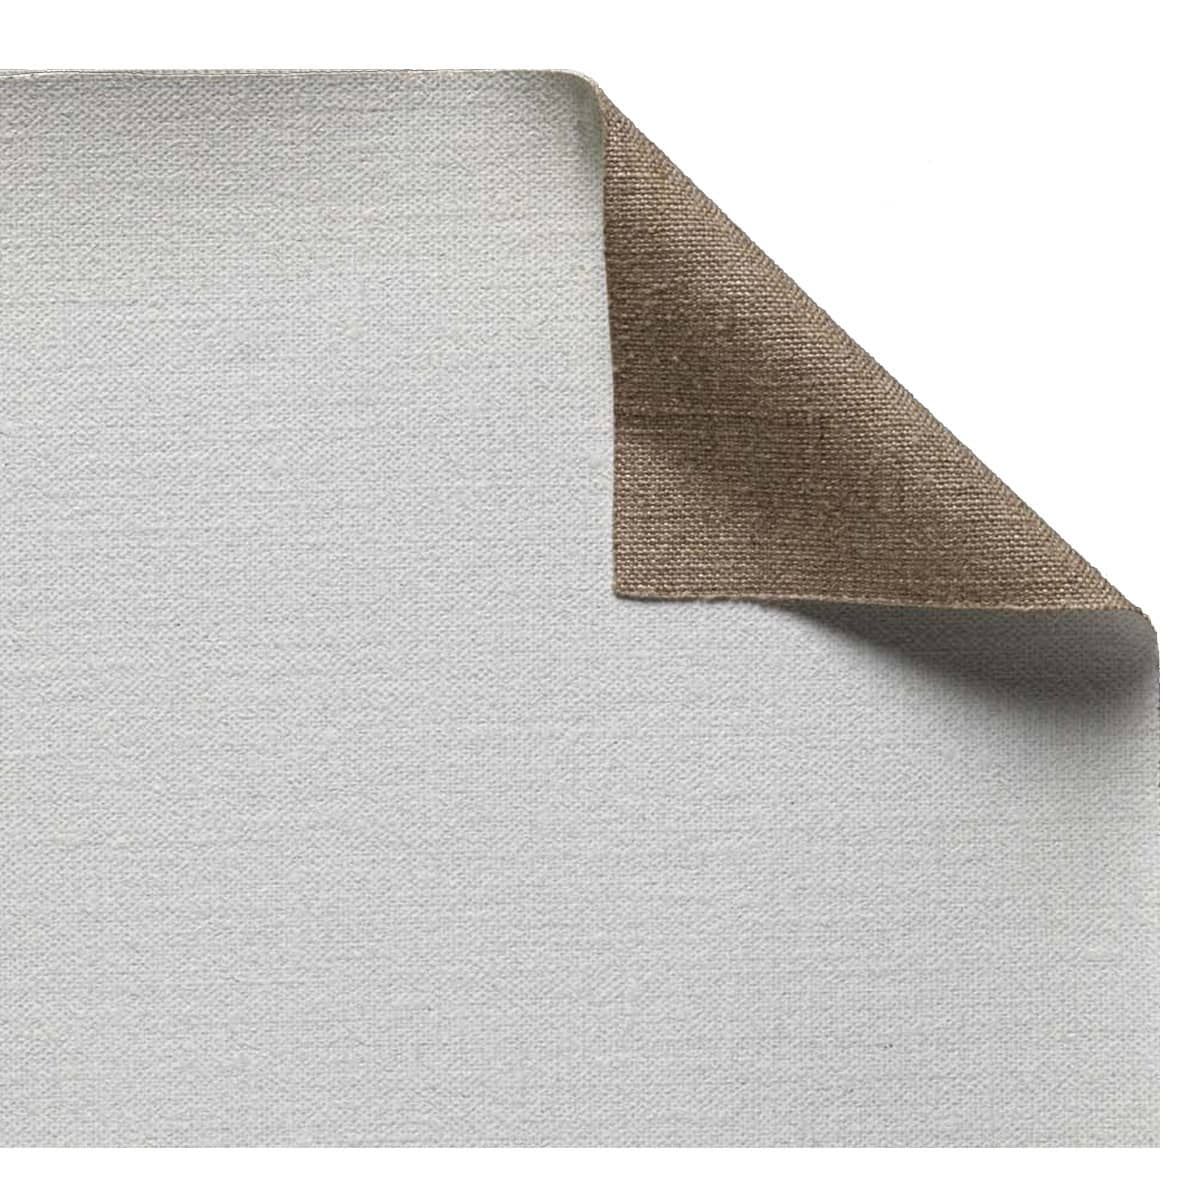 Claessens Linen #66 Single Oil Primed Medium Texture Cut Piece, 18" x 41"